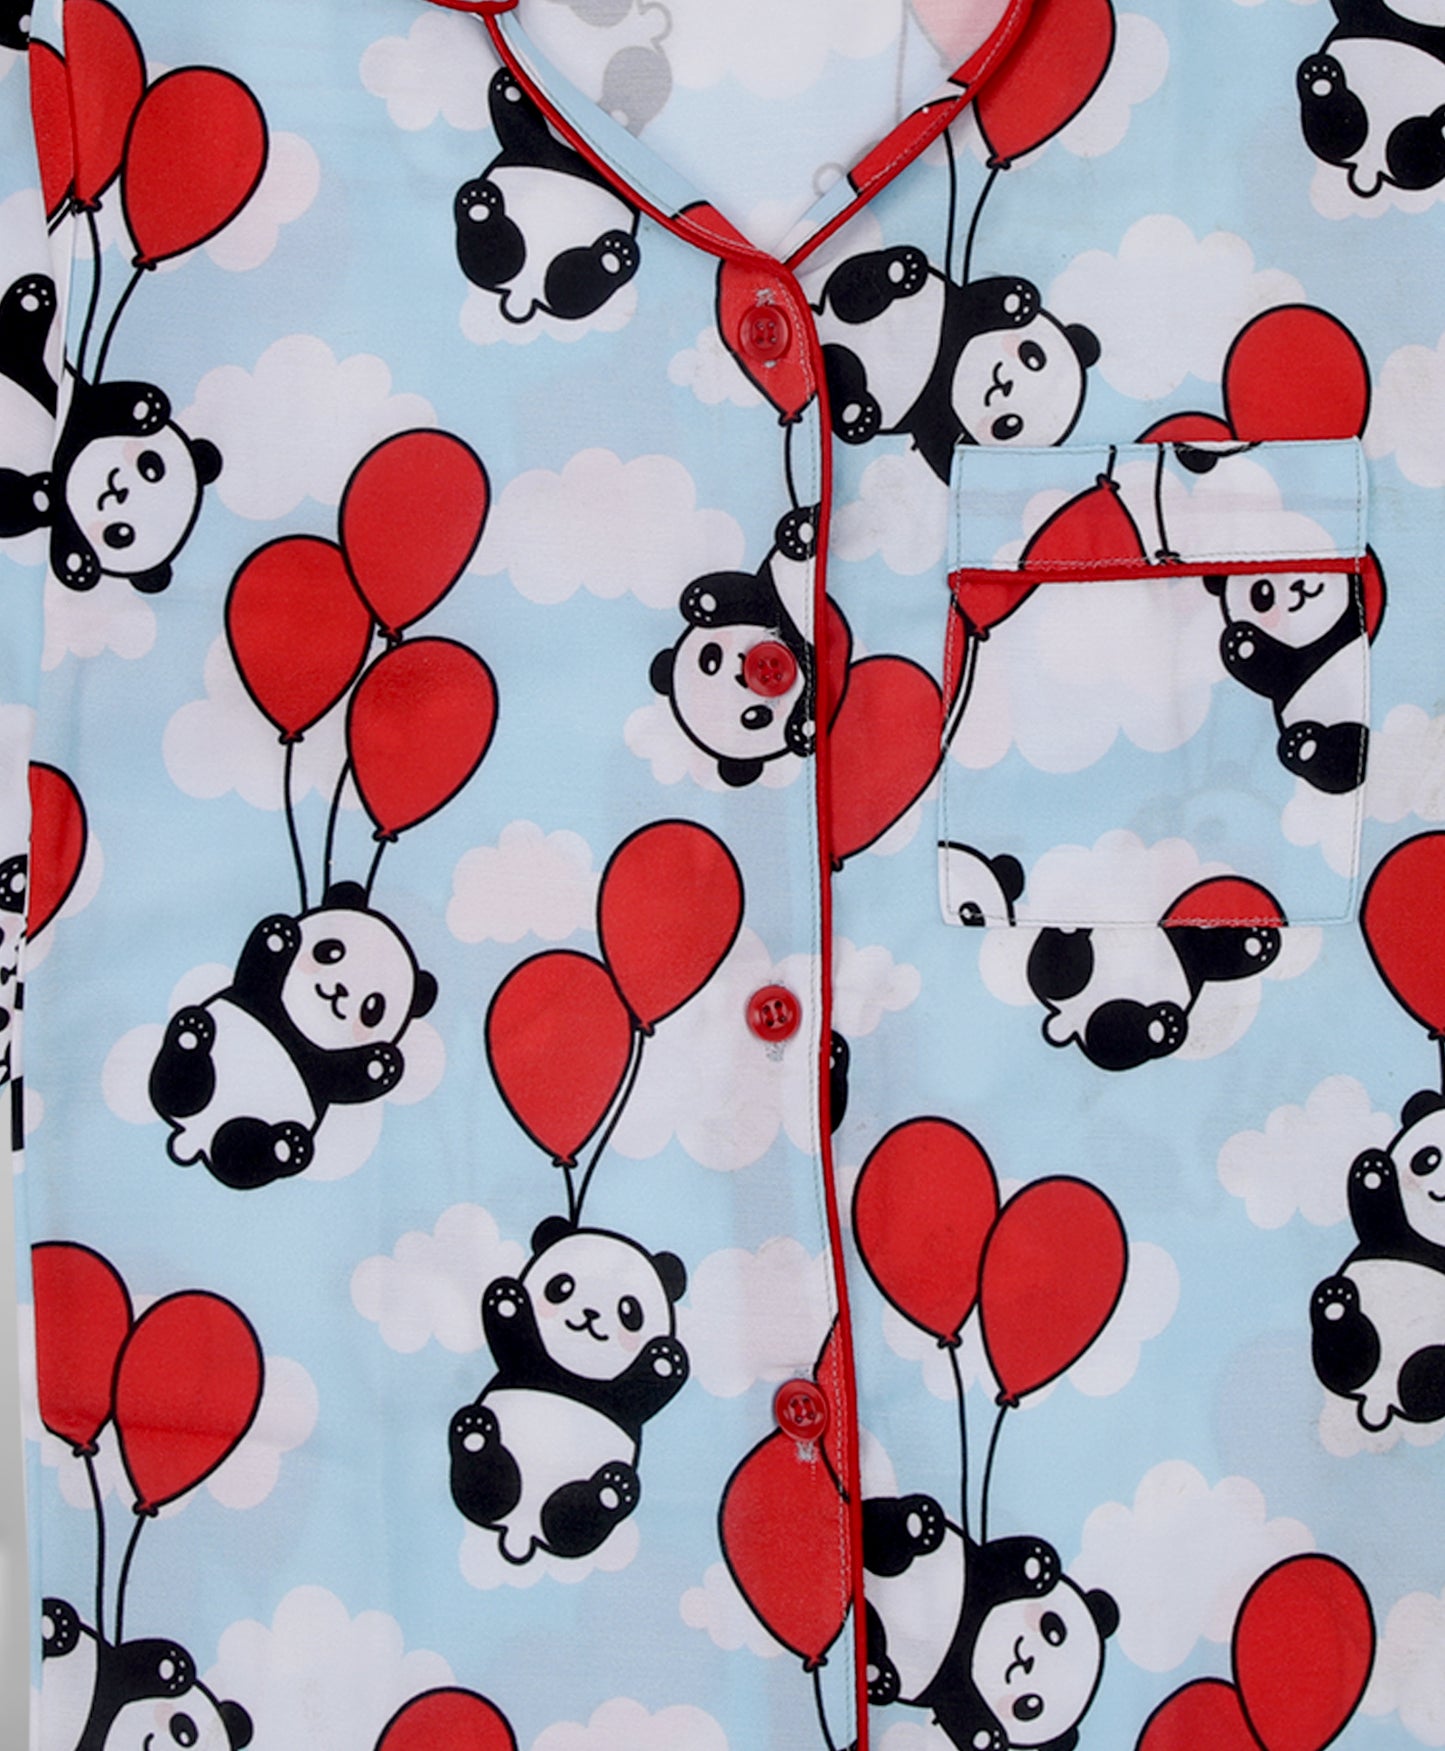 Happy Panda Kids Pj Set - Cotton Rayon Pj Set with Notched Collar